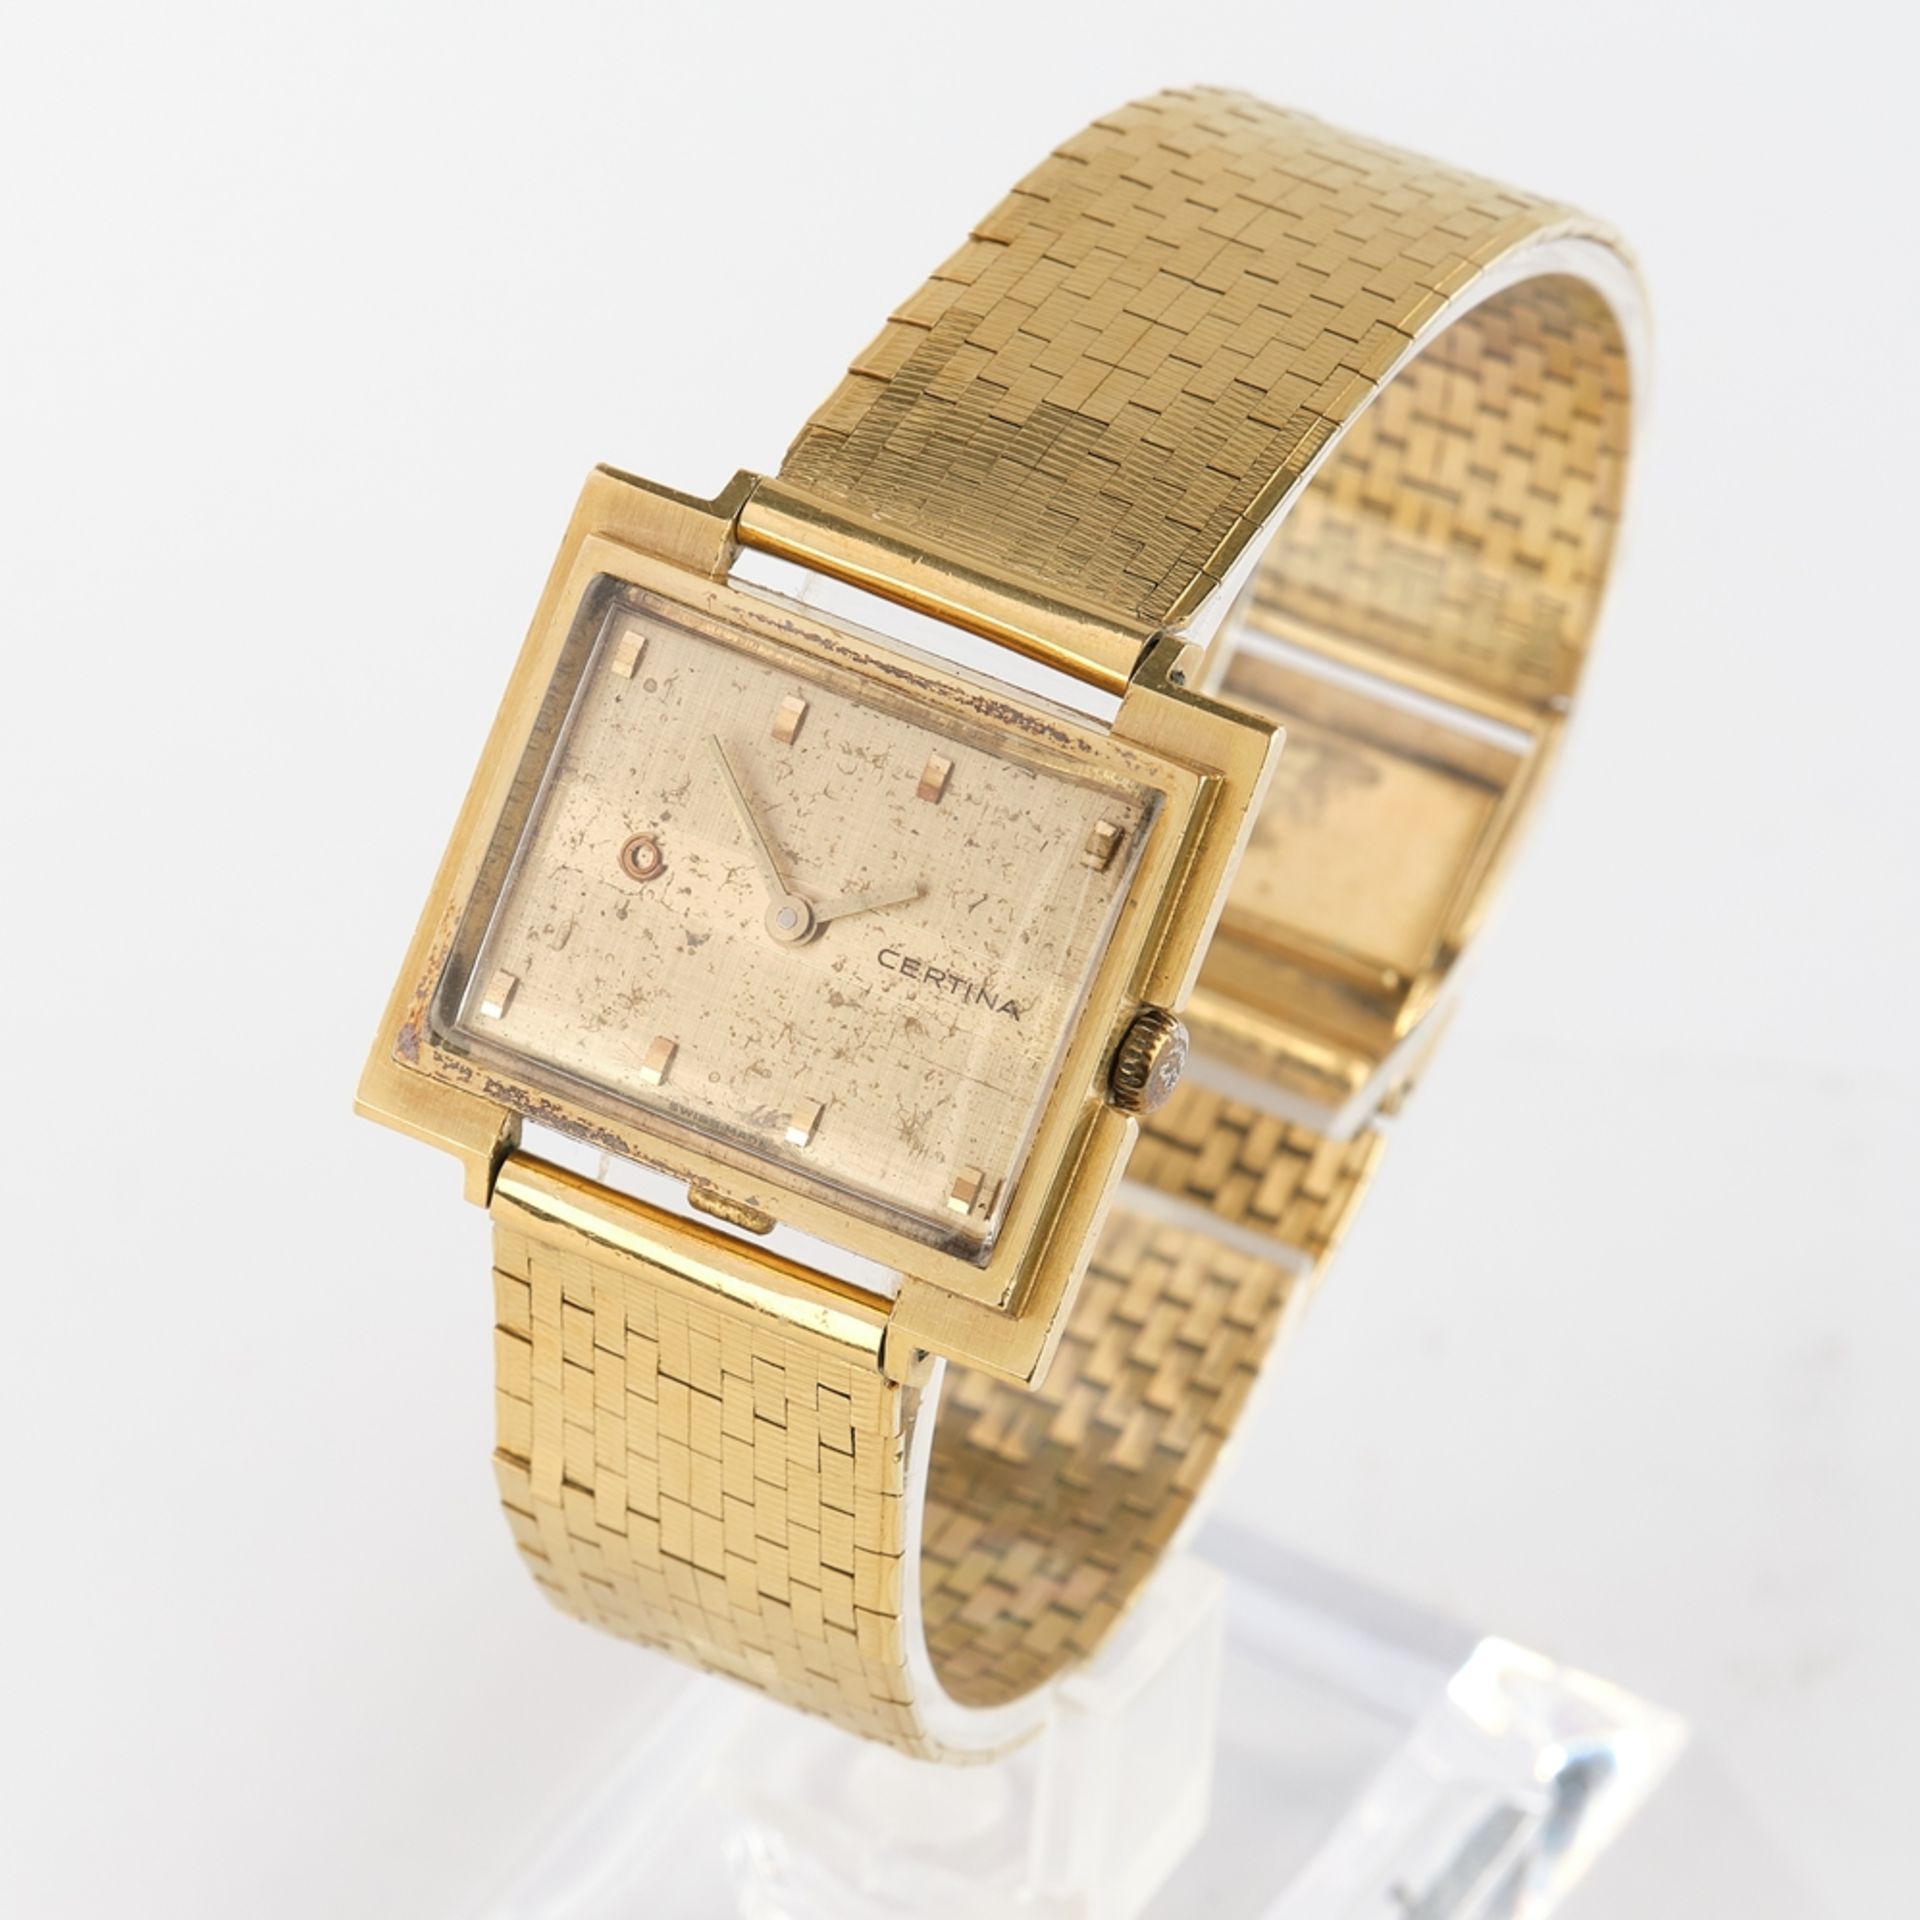 Certina, Switzerland, 1966, ladies' wristwatch, GG 750, manual winding cal. 19-30 or 19-55, rectang - Image 3 of 4